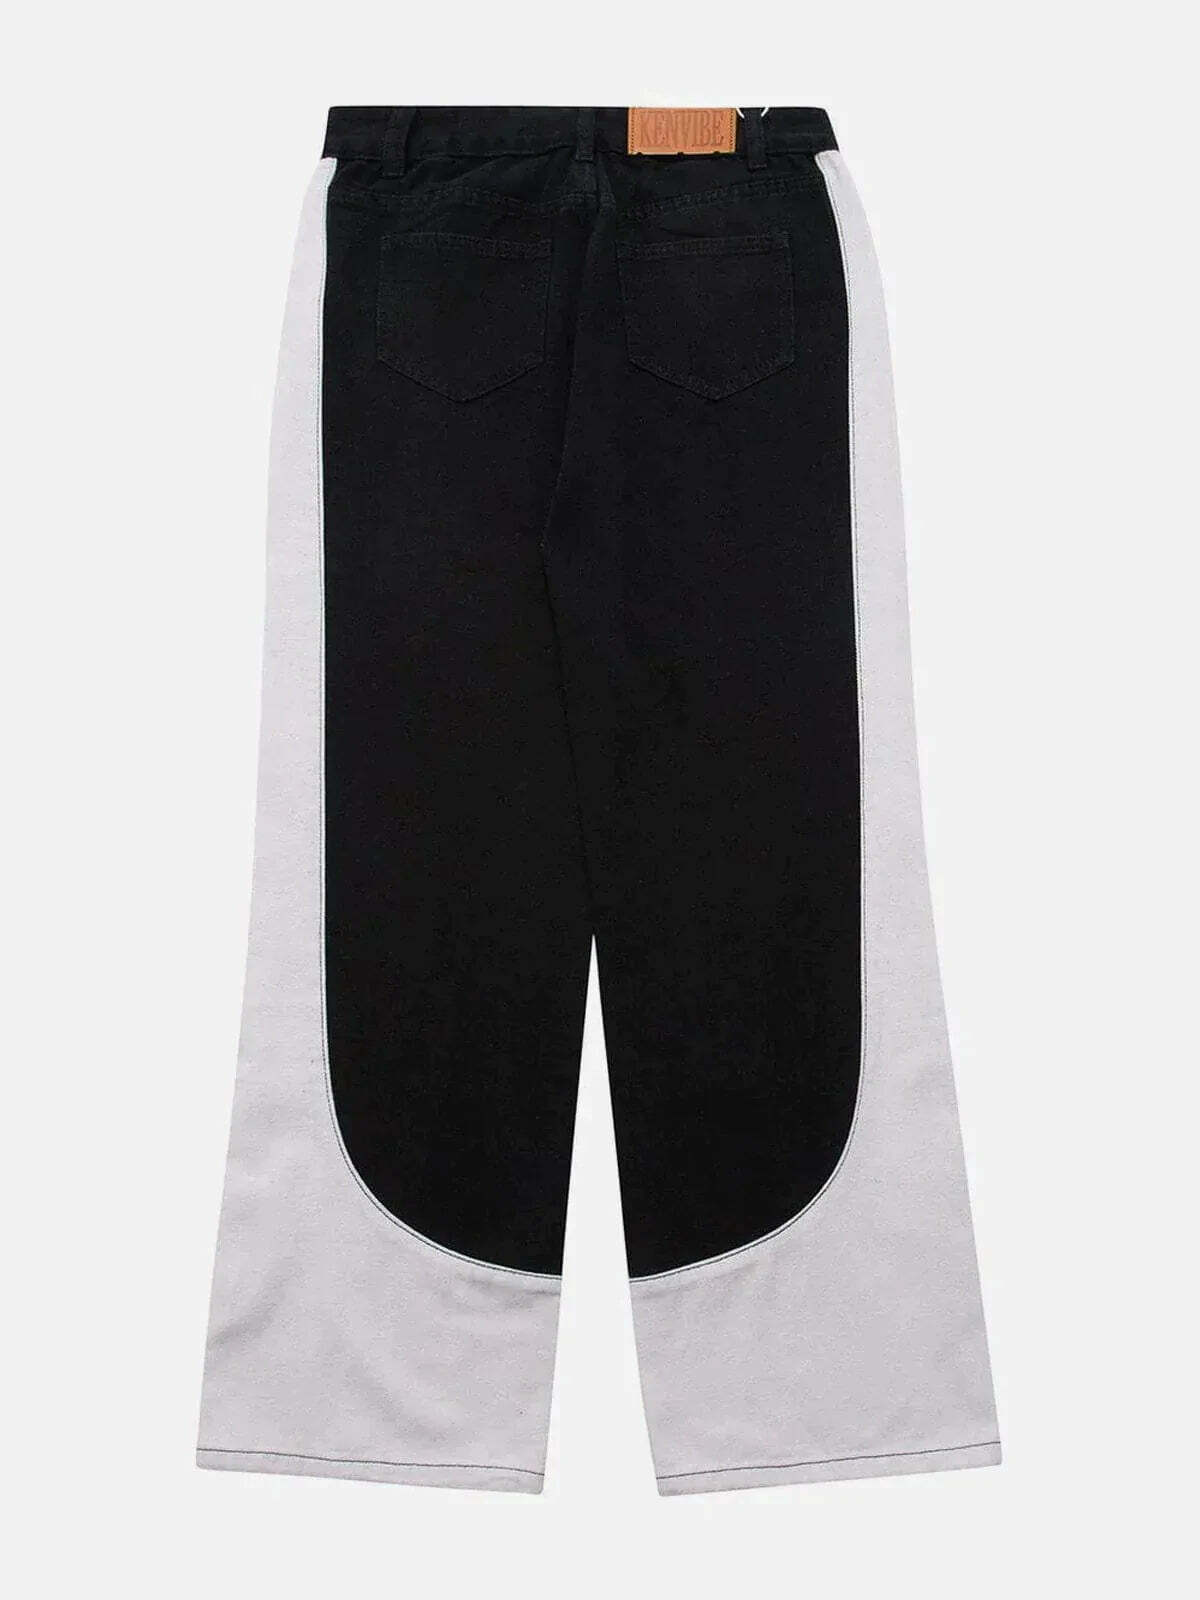 revolutionary patchwork jeans edgy & trendy denim 3224